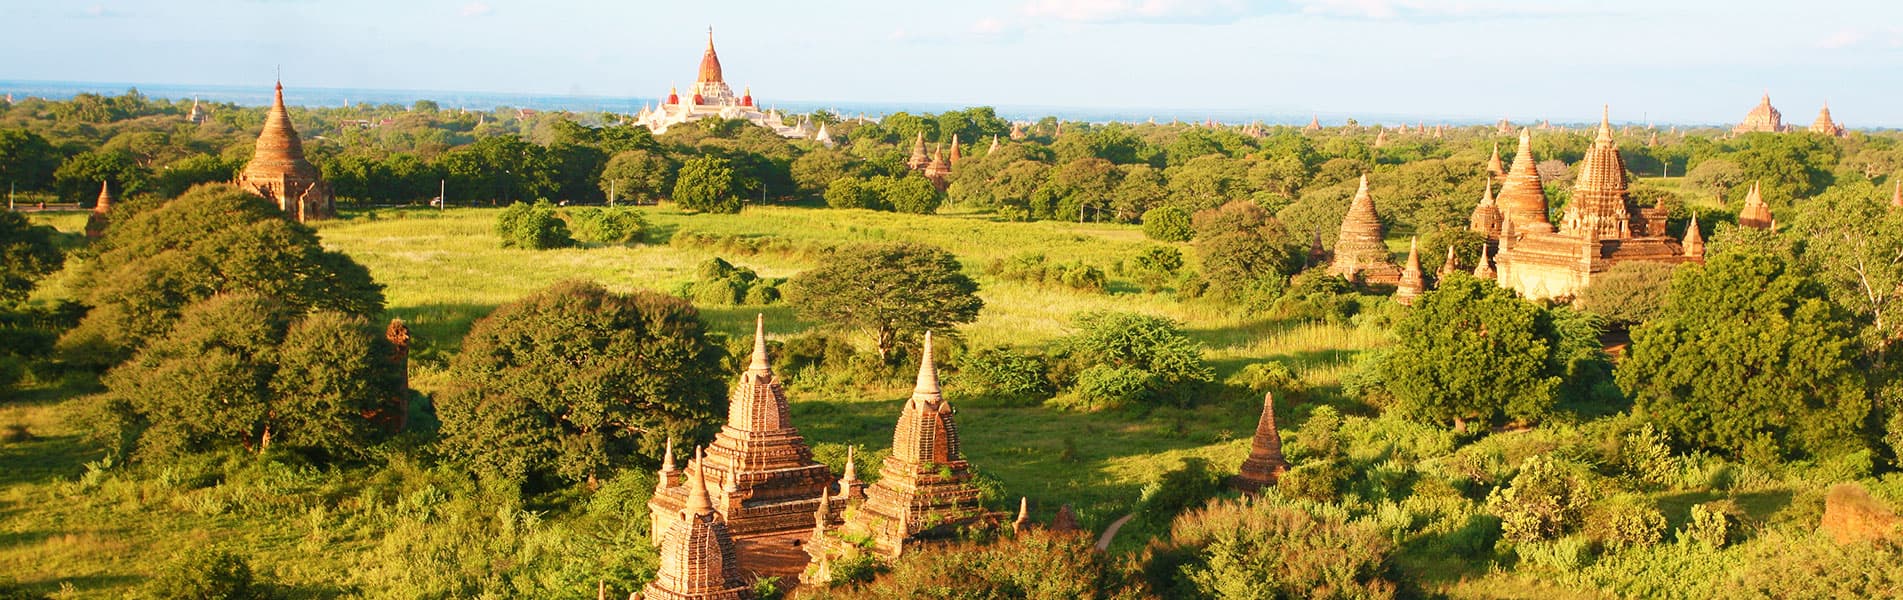 Shwesandaw Pagoda, Bagan